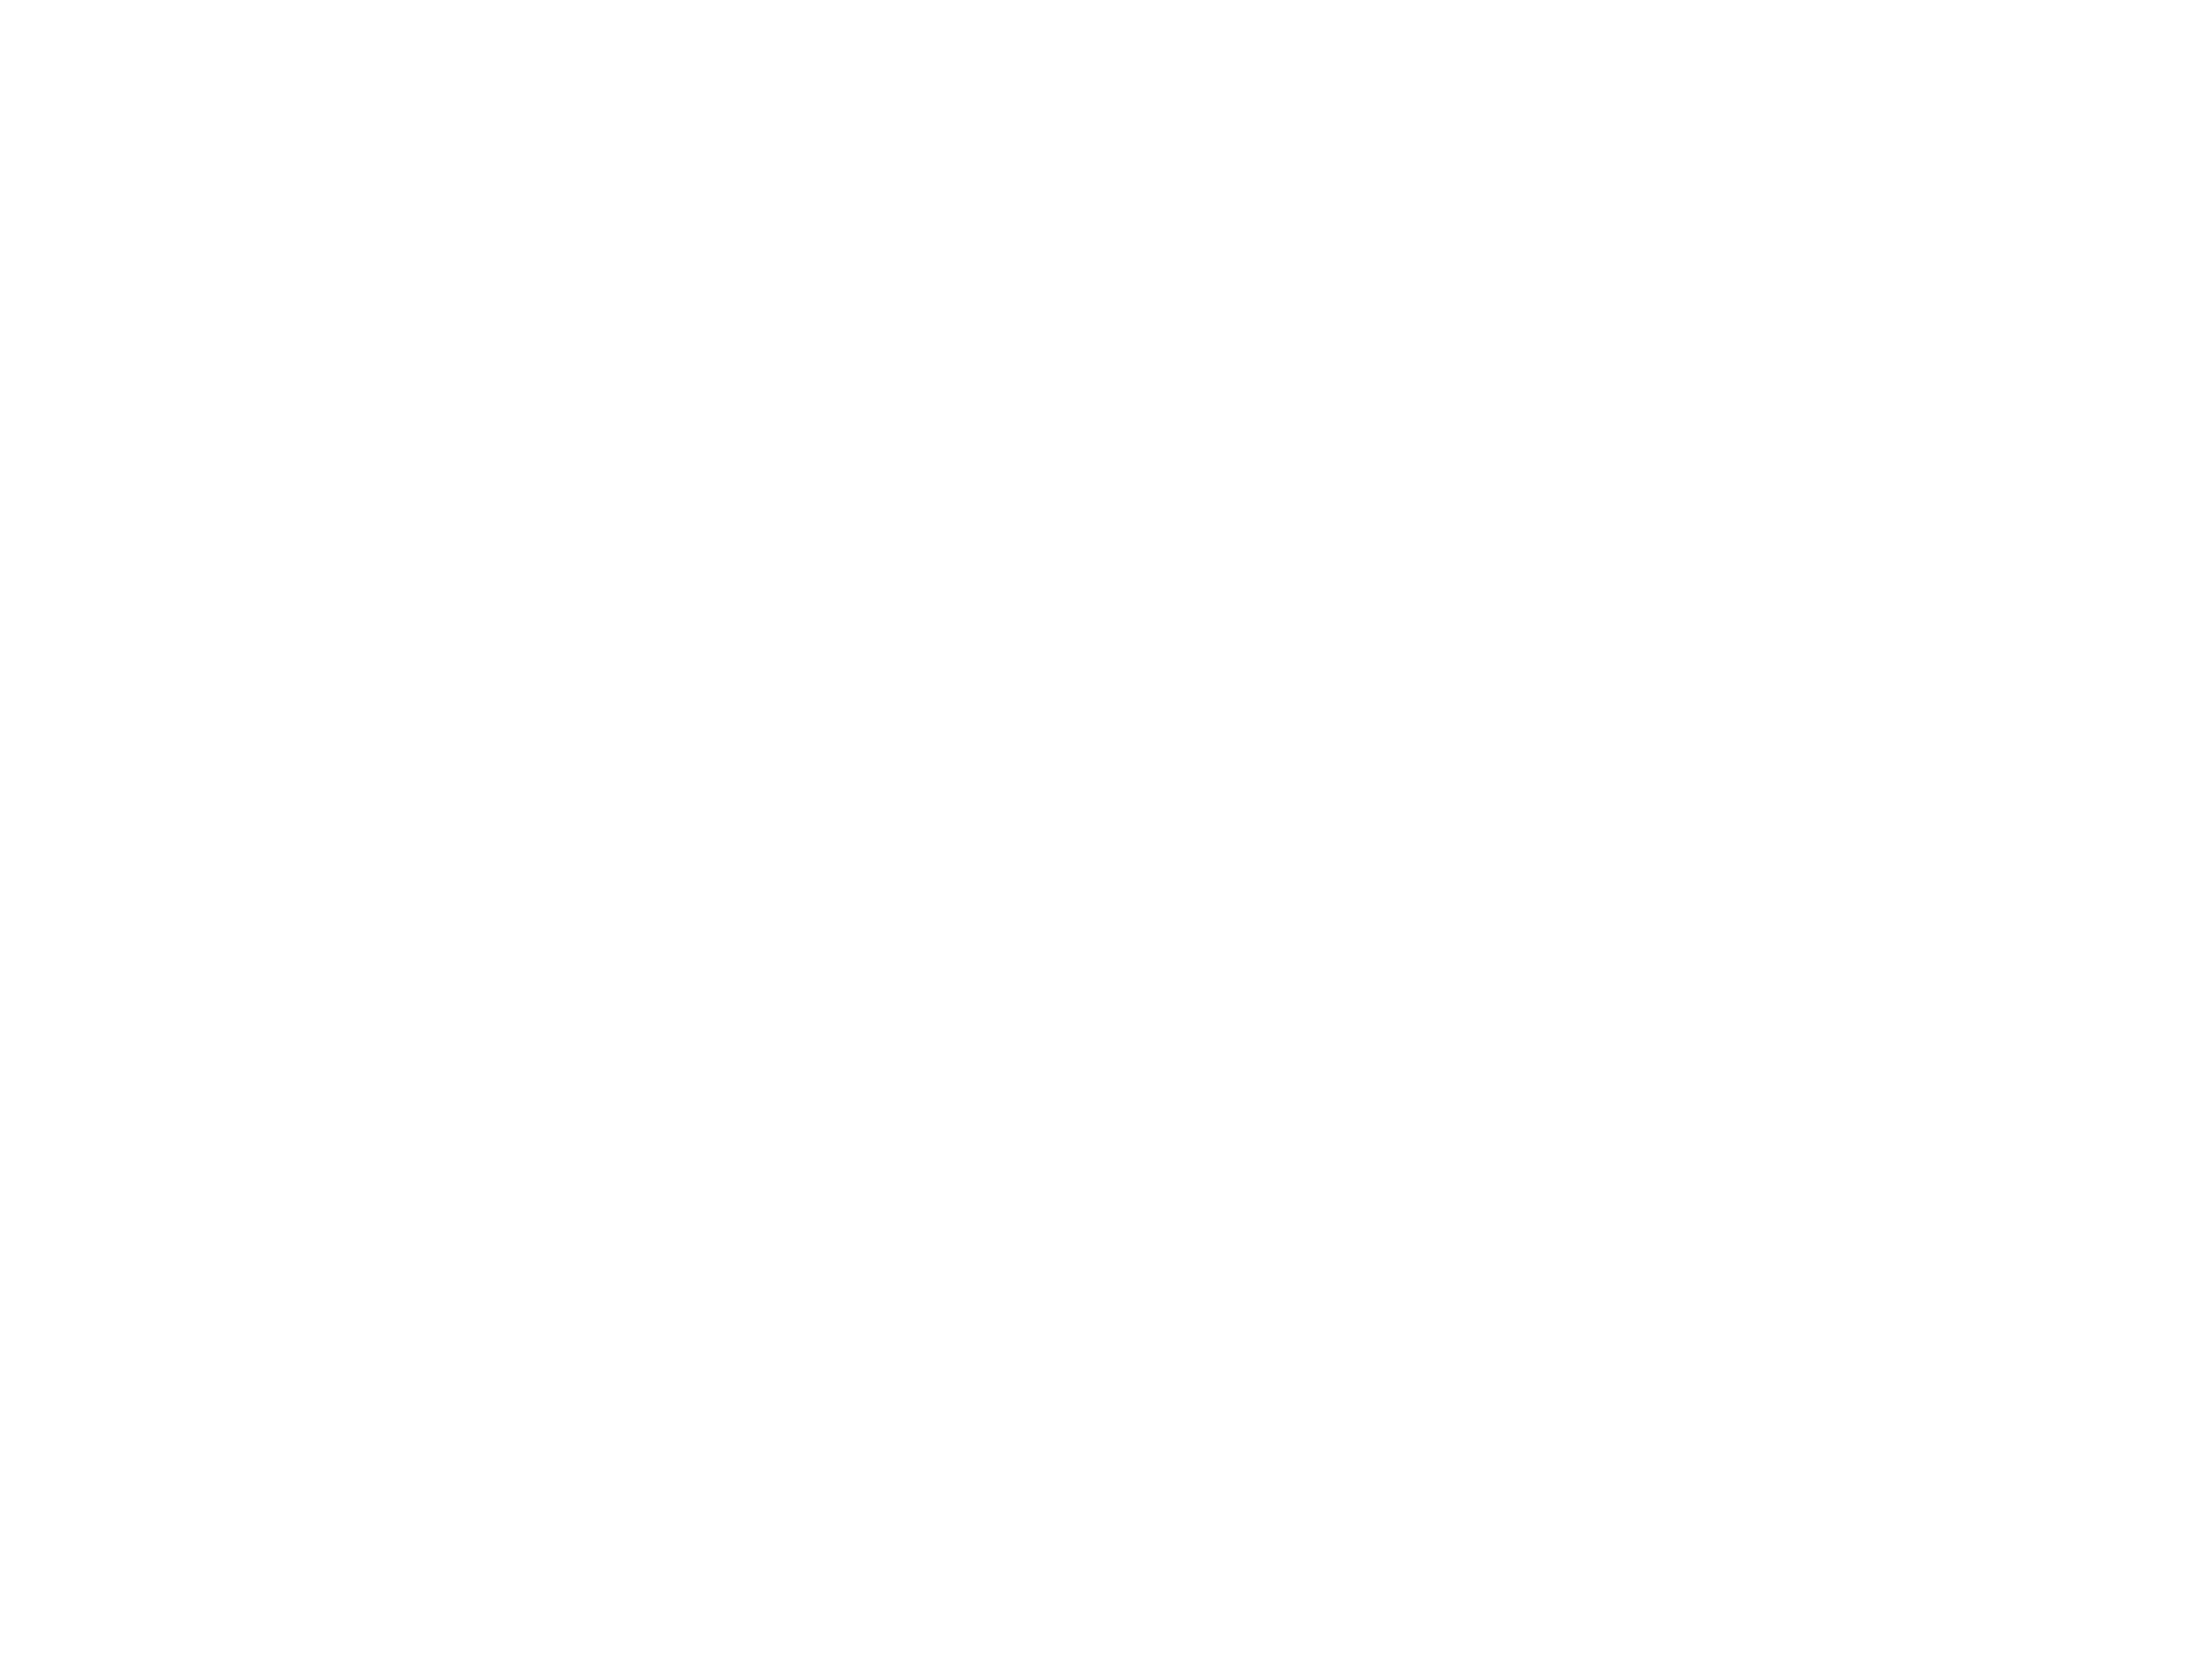 Higma Service